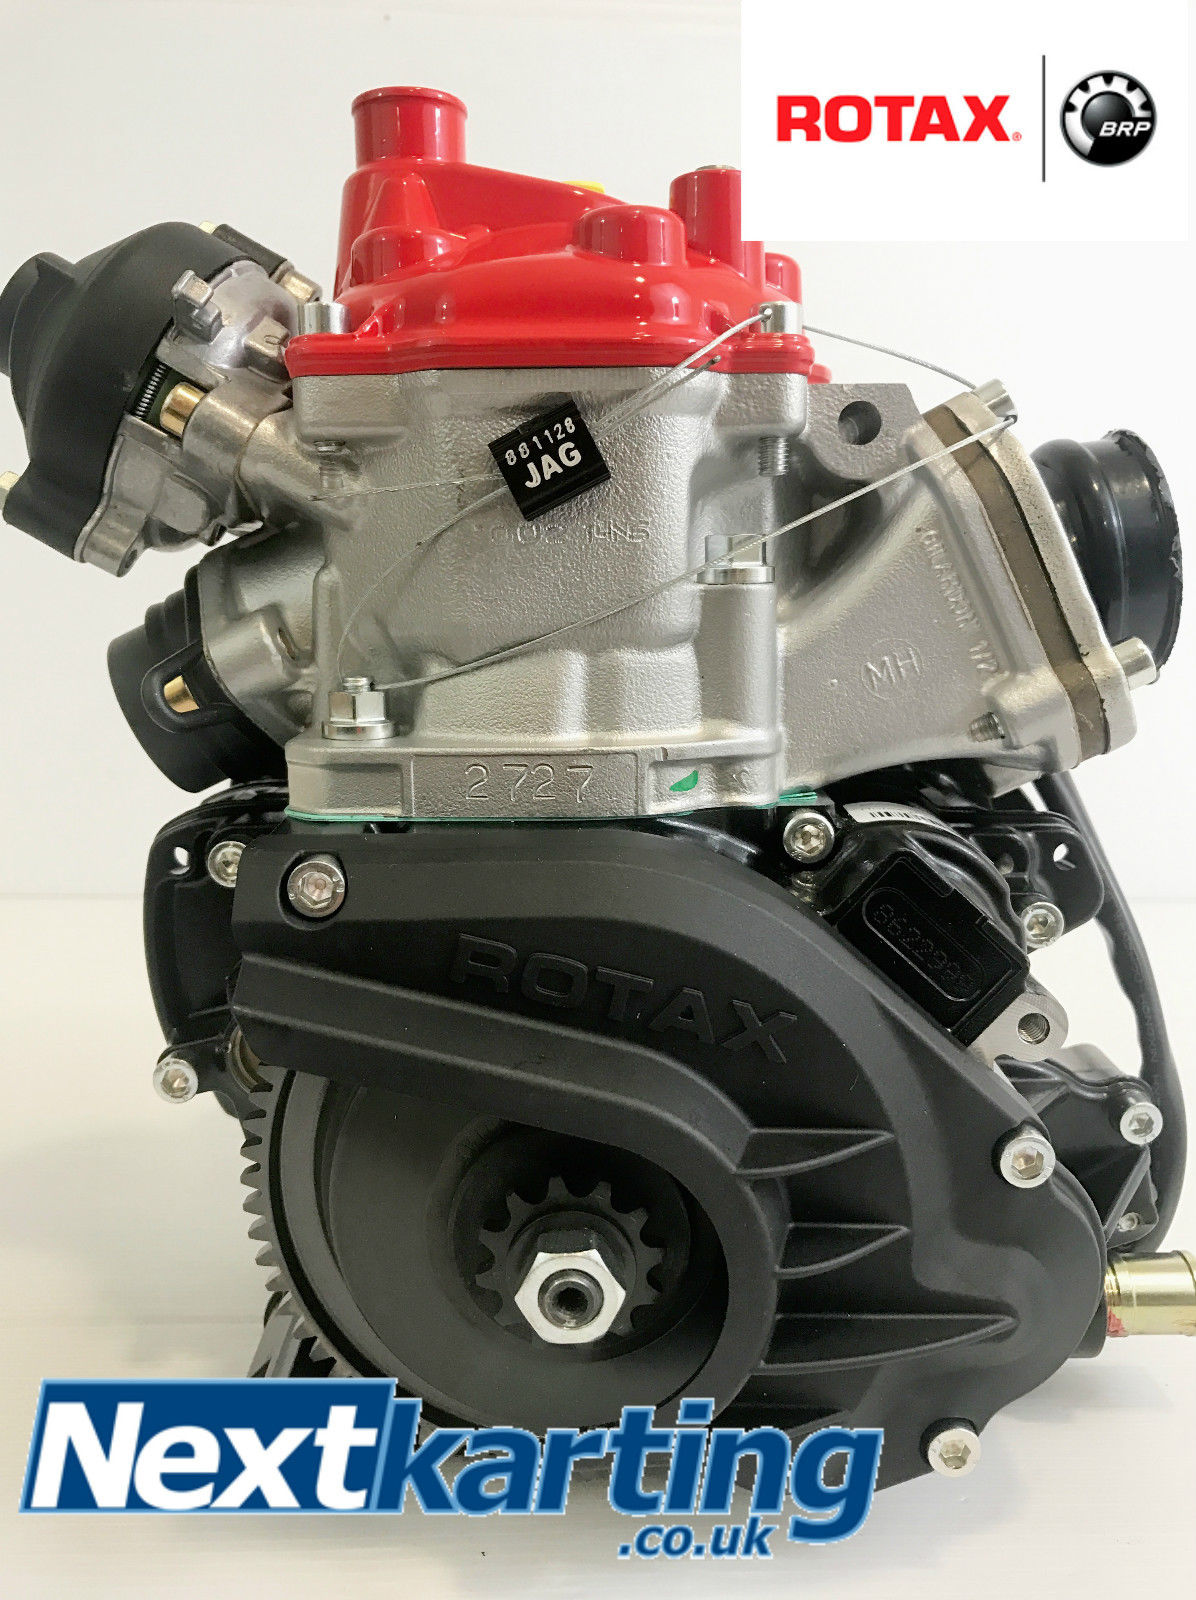 PIÑÓN de motor Rotax Max 11 T-adecuado para todas las Rotax Kart-nextkarting-Nuevo